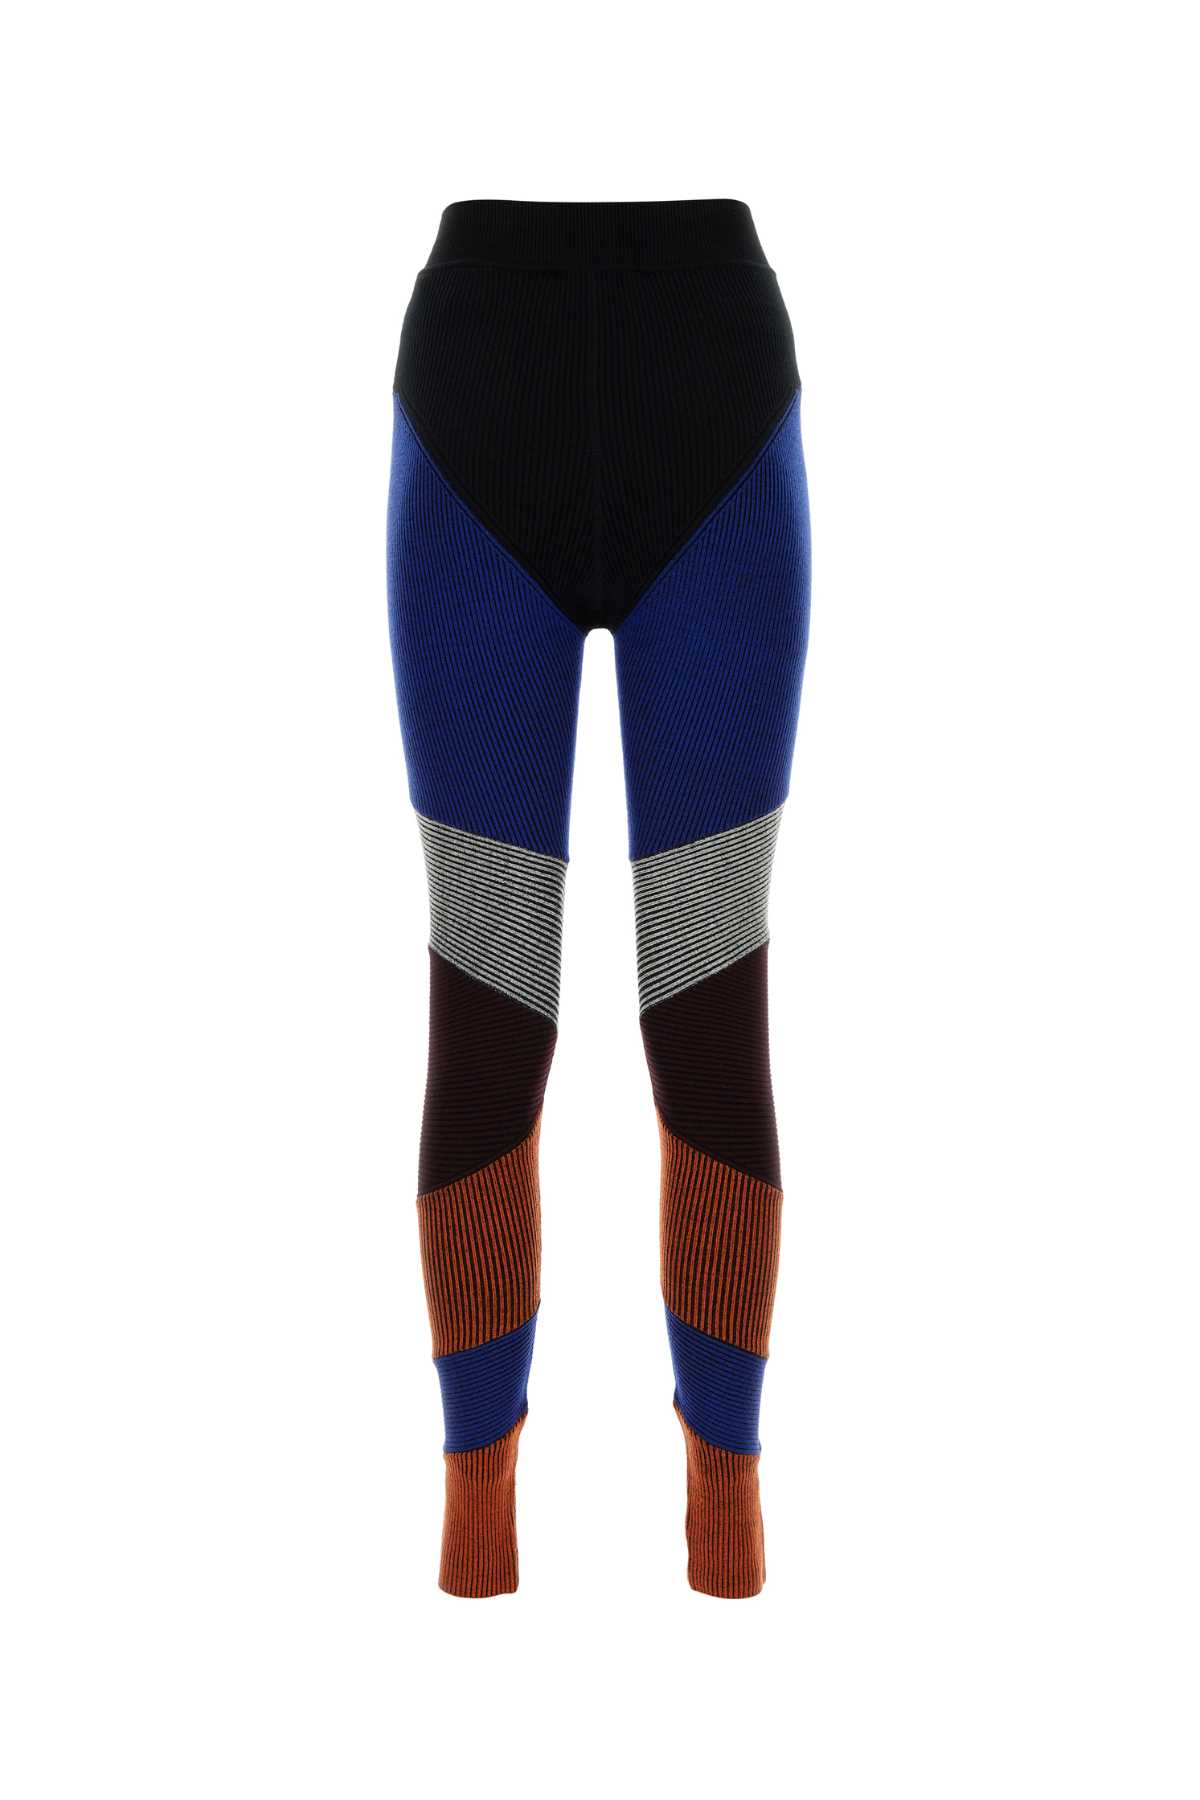 Chloé Multicolor Stretch Wool Blend Leggings In Multicolor1